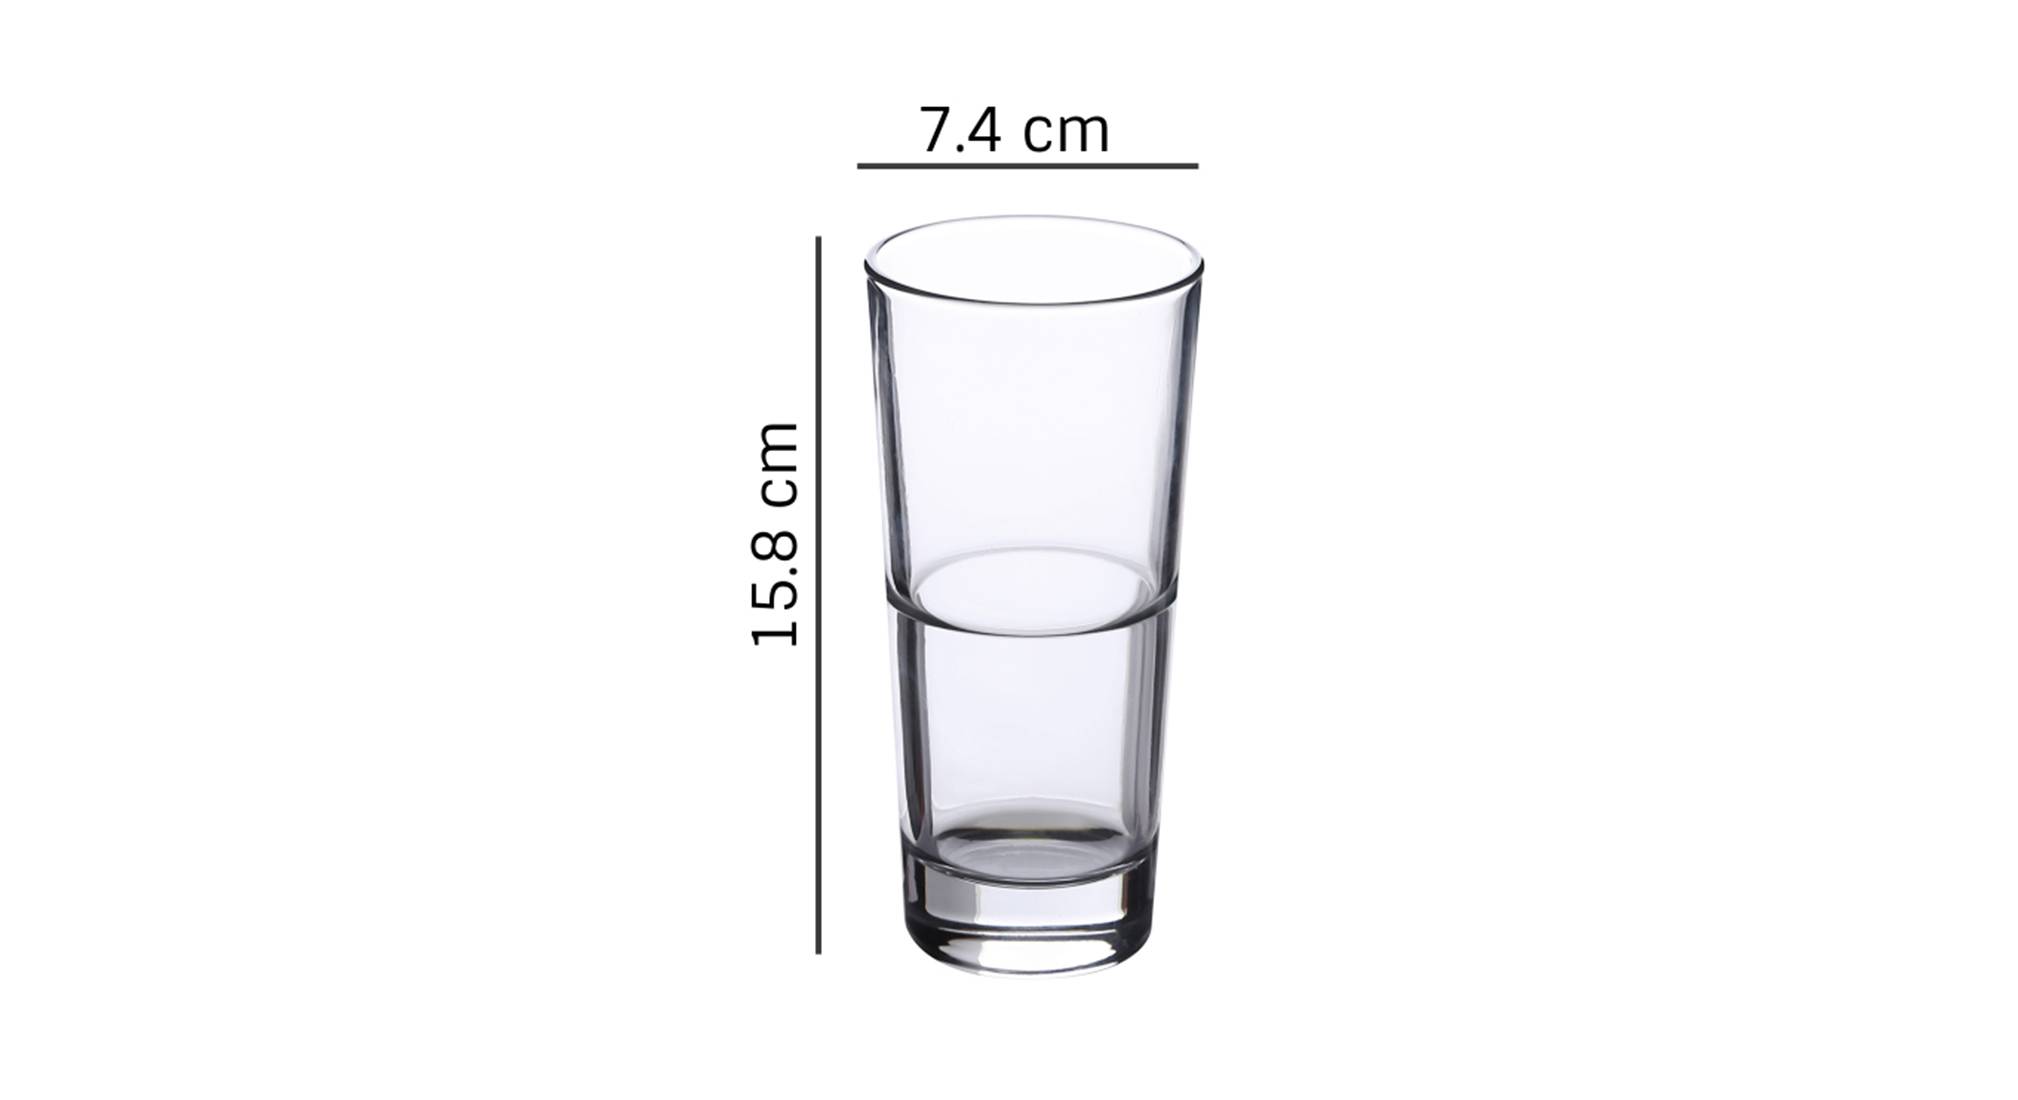 Zlata drinking glass set of 6 transparent 5